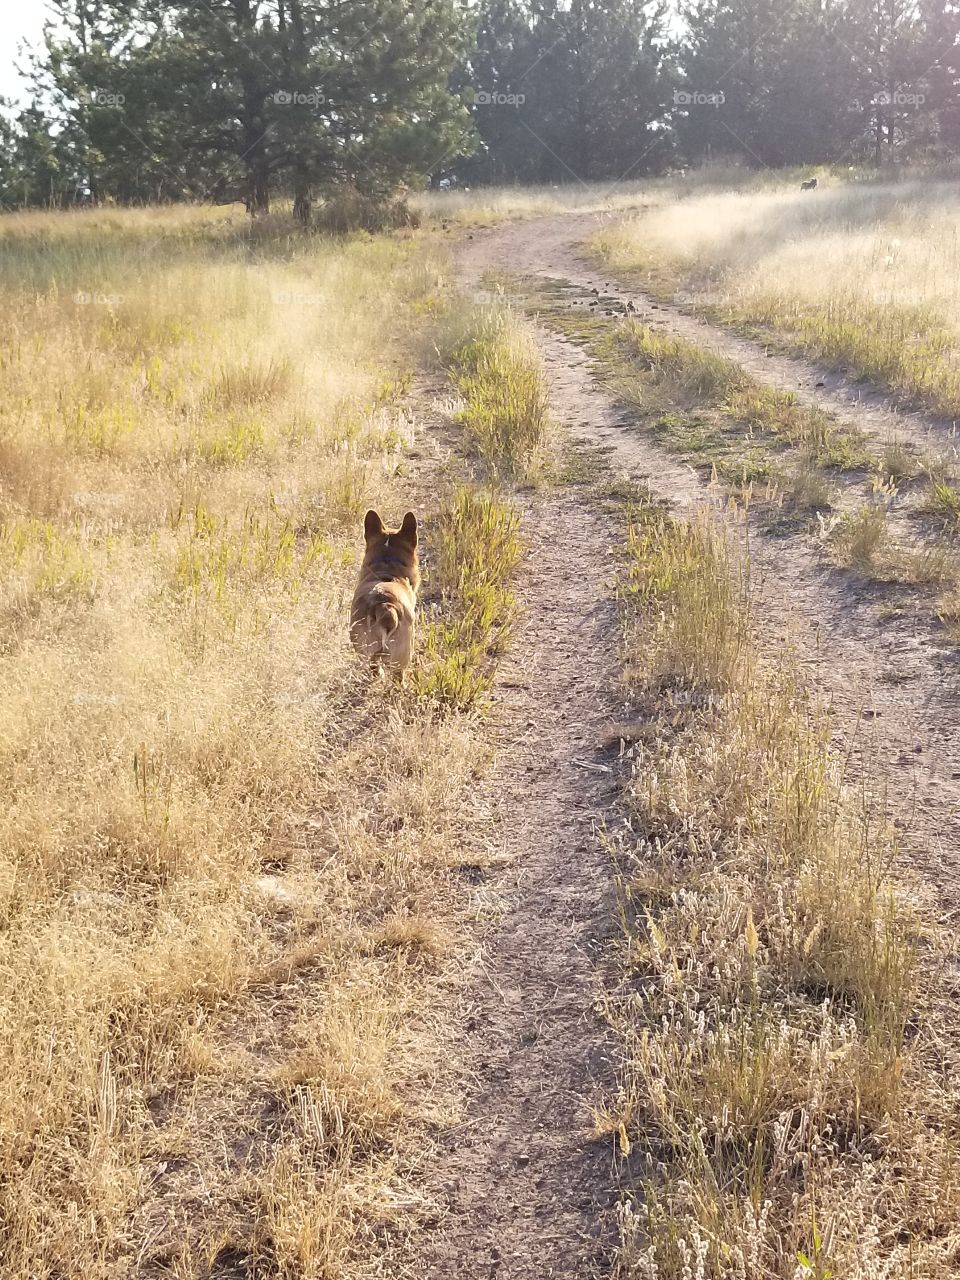 Charlie, the corgi, goes for a hike in Montana